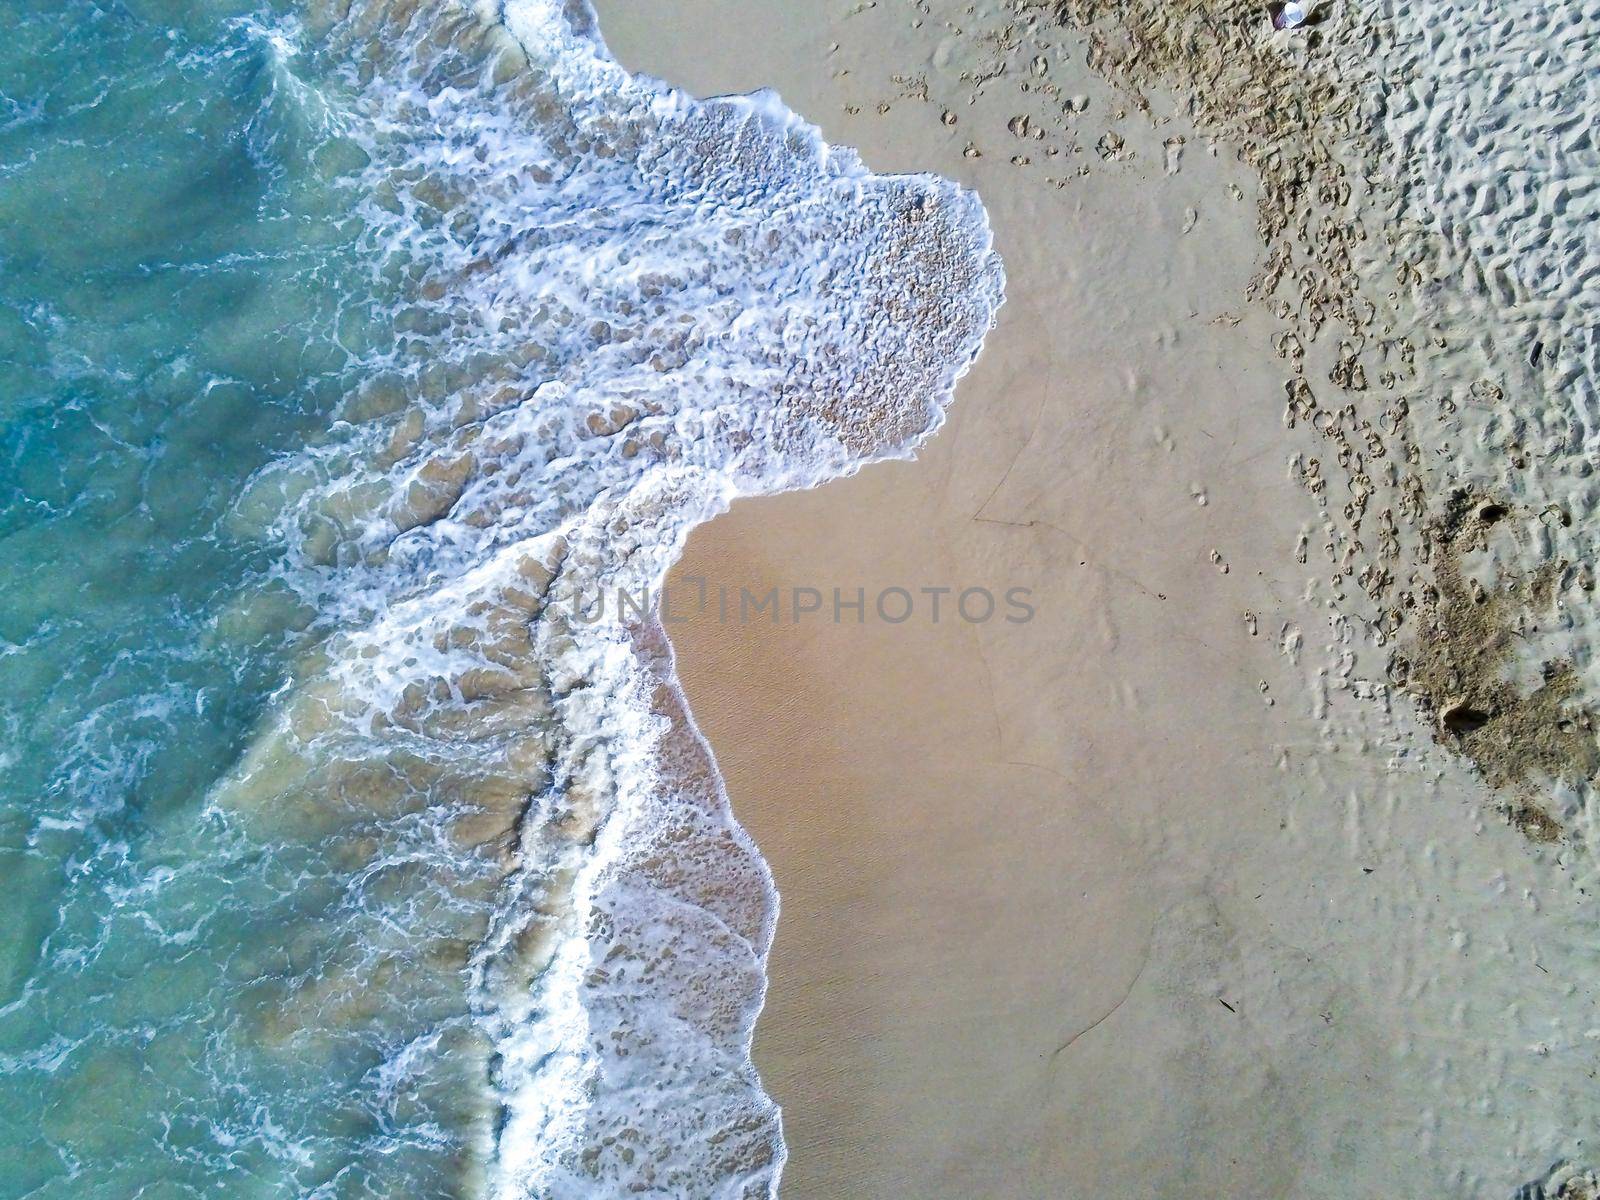 waimanalo beach oahu hawaii vacation spot by digidreamgrafix